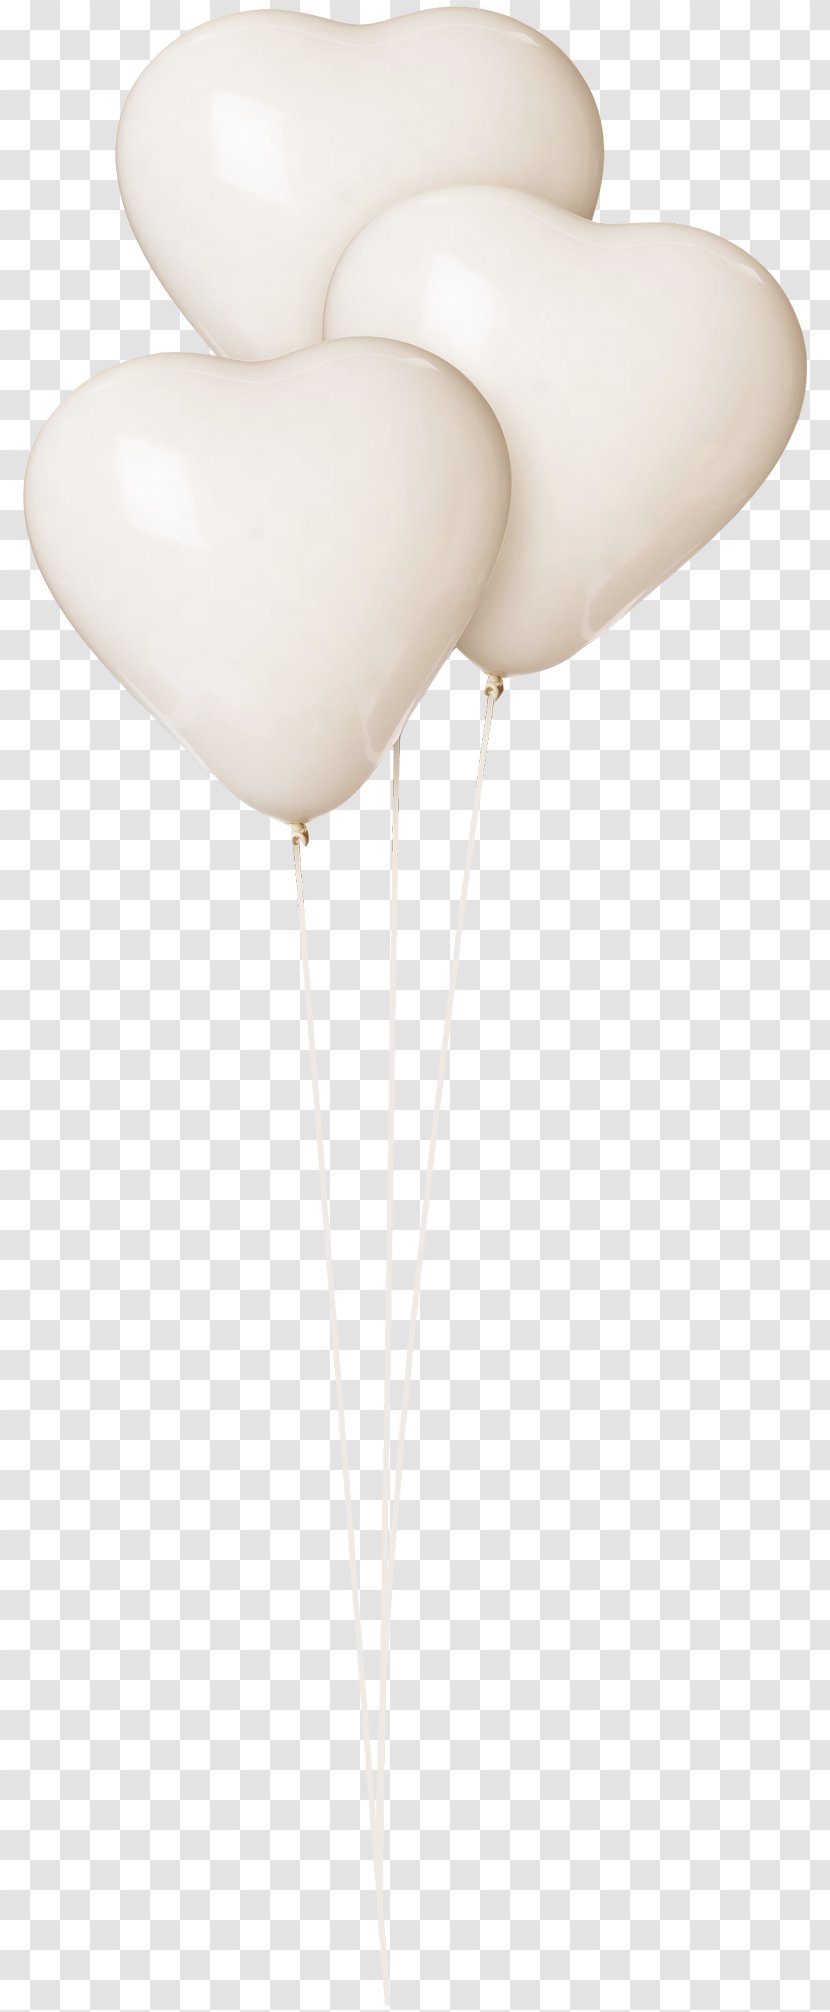 Heart - Pretty Balloon Transparent PNG